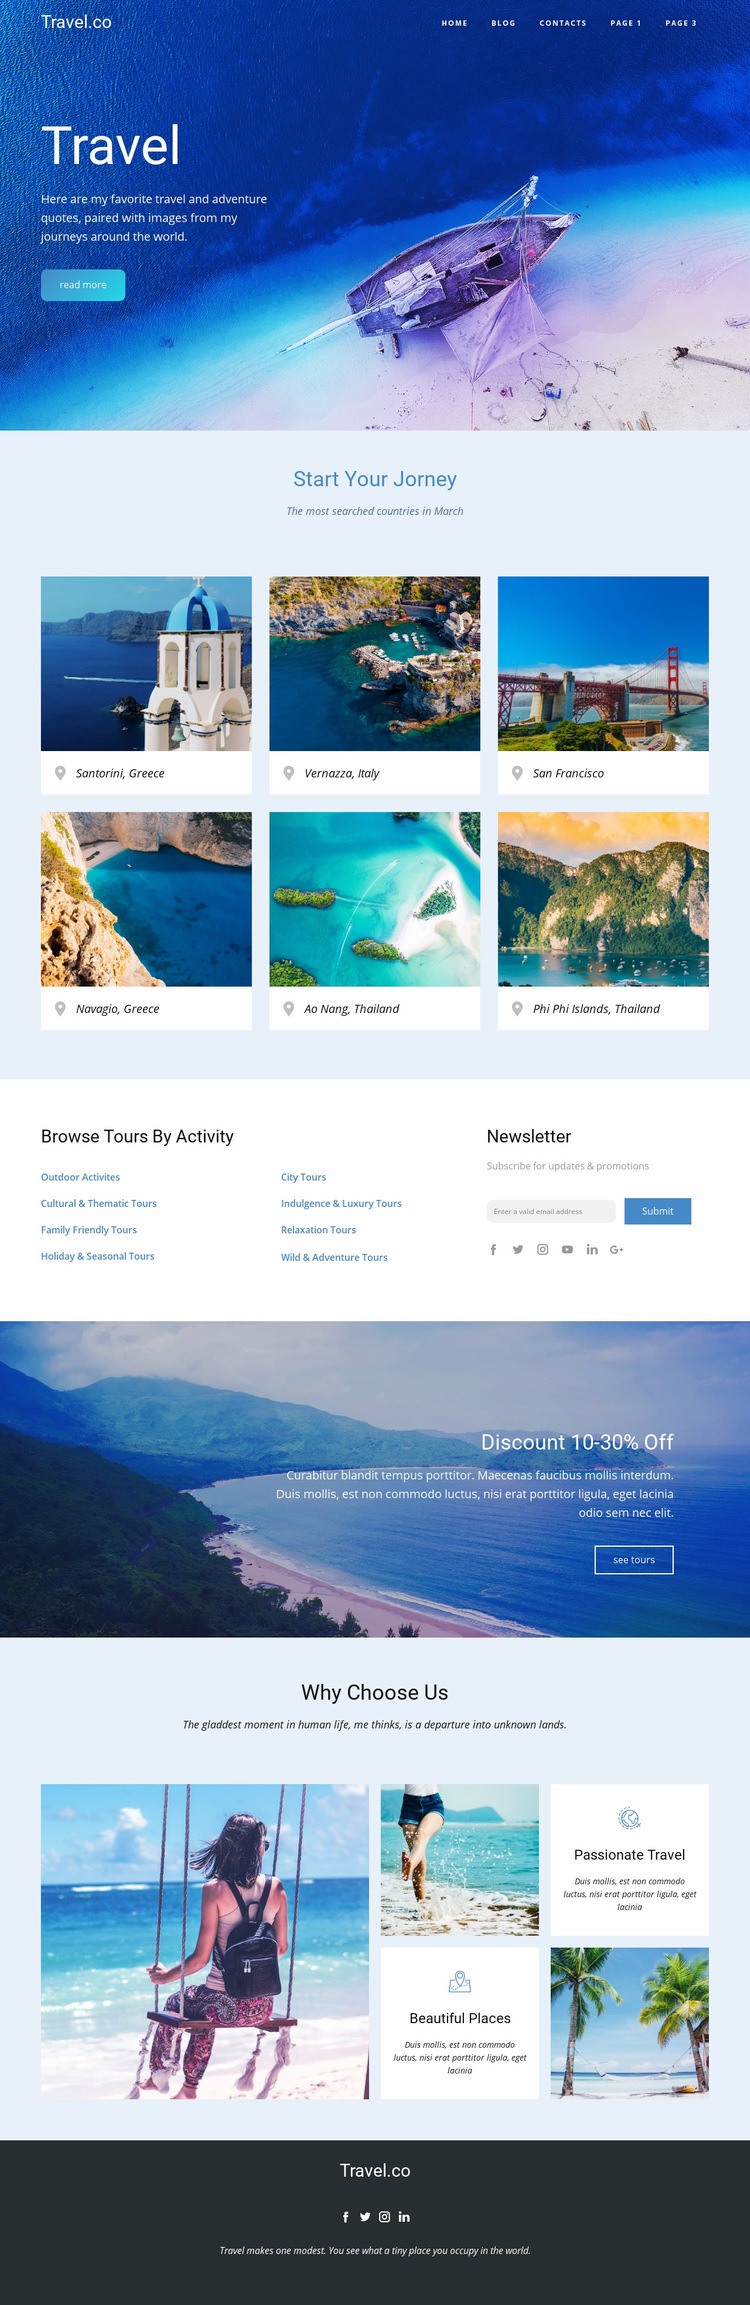 Amazing ideas for travel WordPress Website